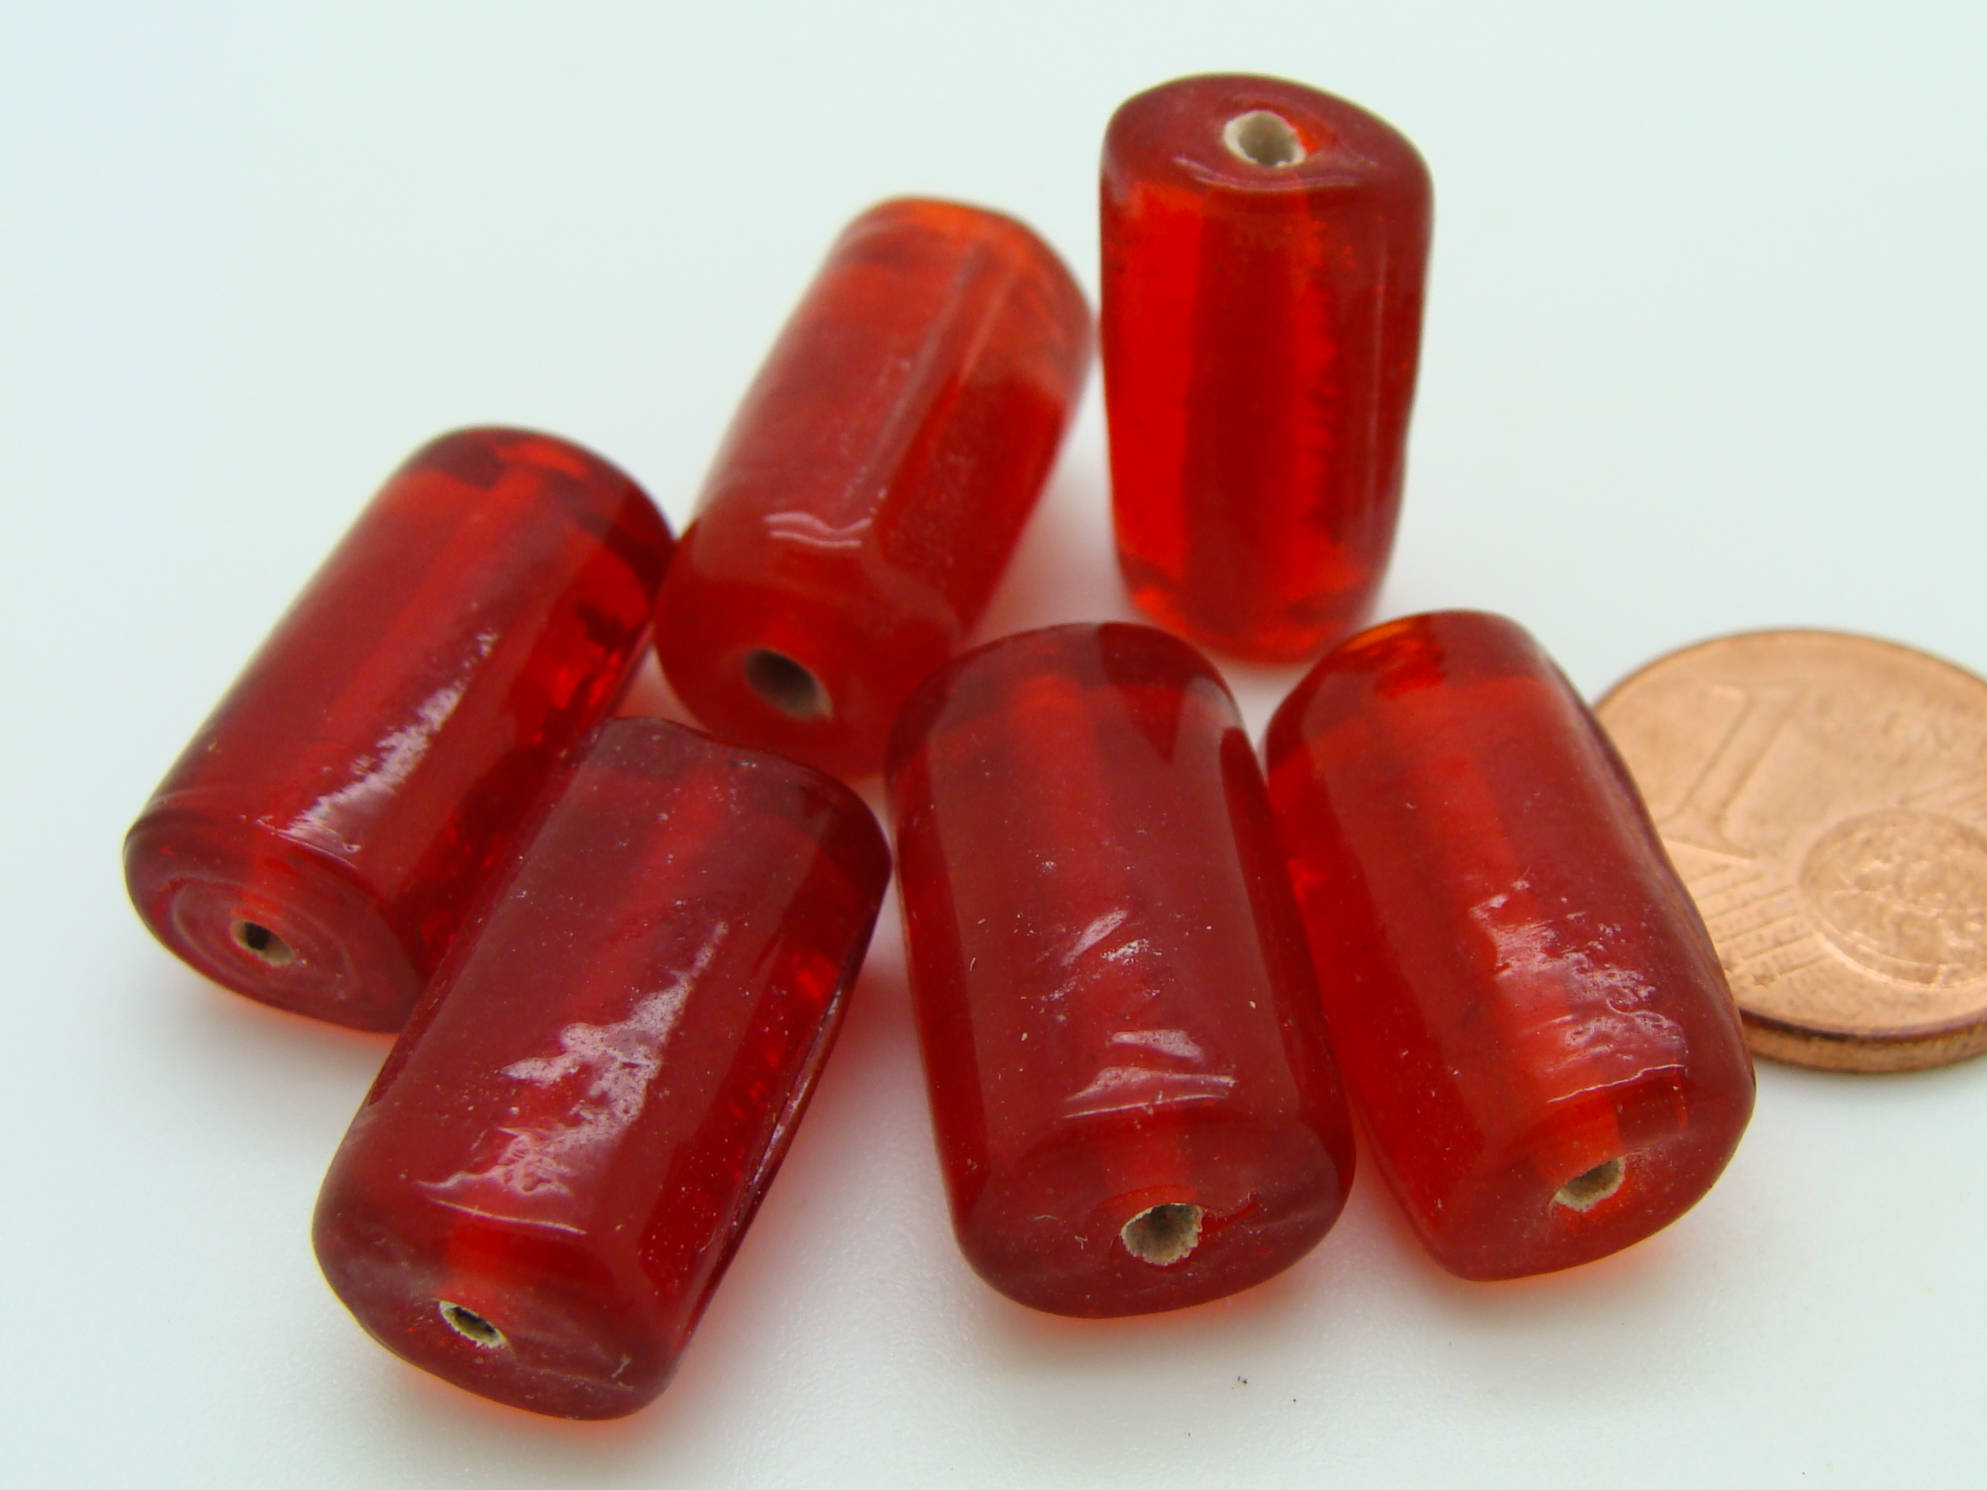 VS-T18x10-rouge perles tubes rouge